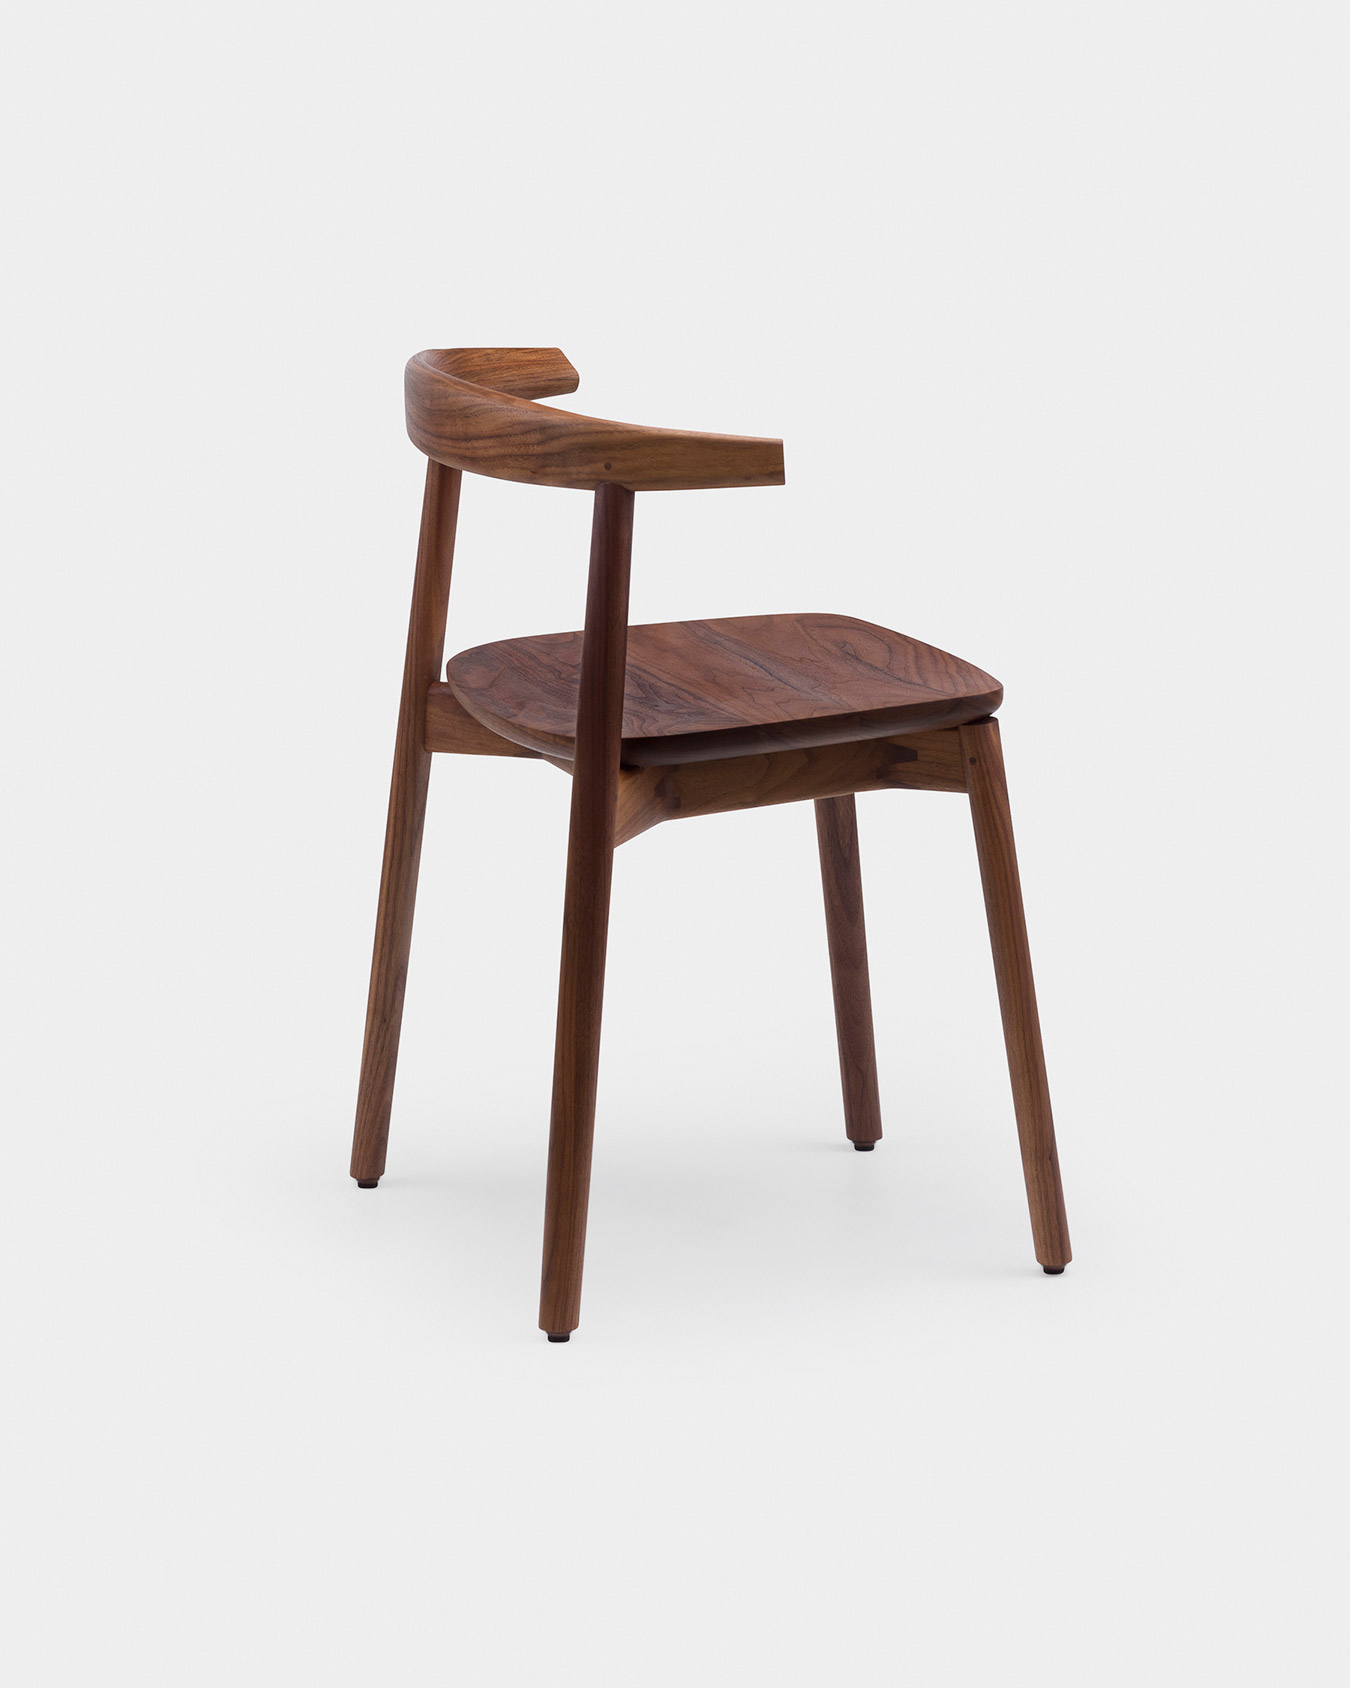 Minimalist Chair Design: Ando Chair by Matthew Hilton for De La Espada via Aesence